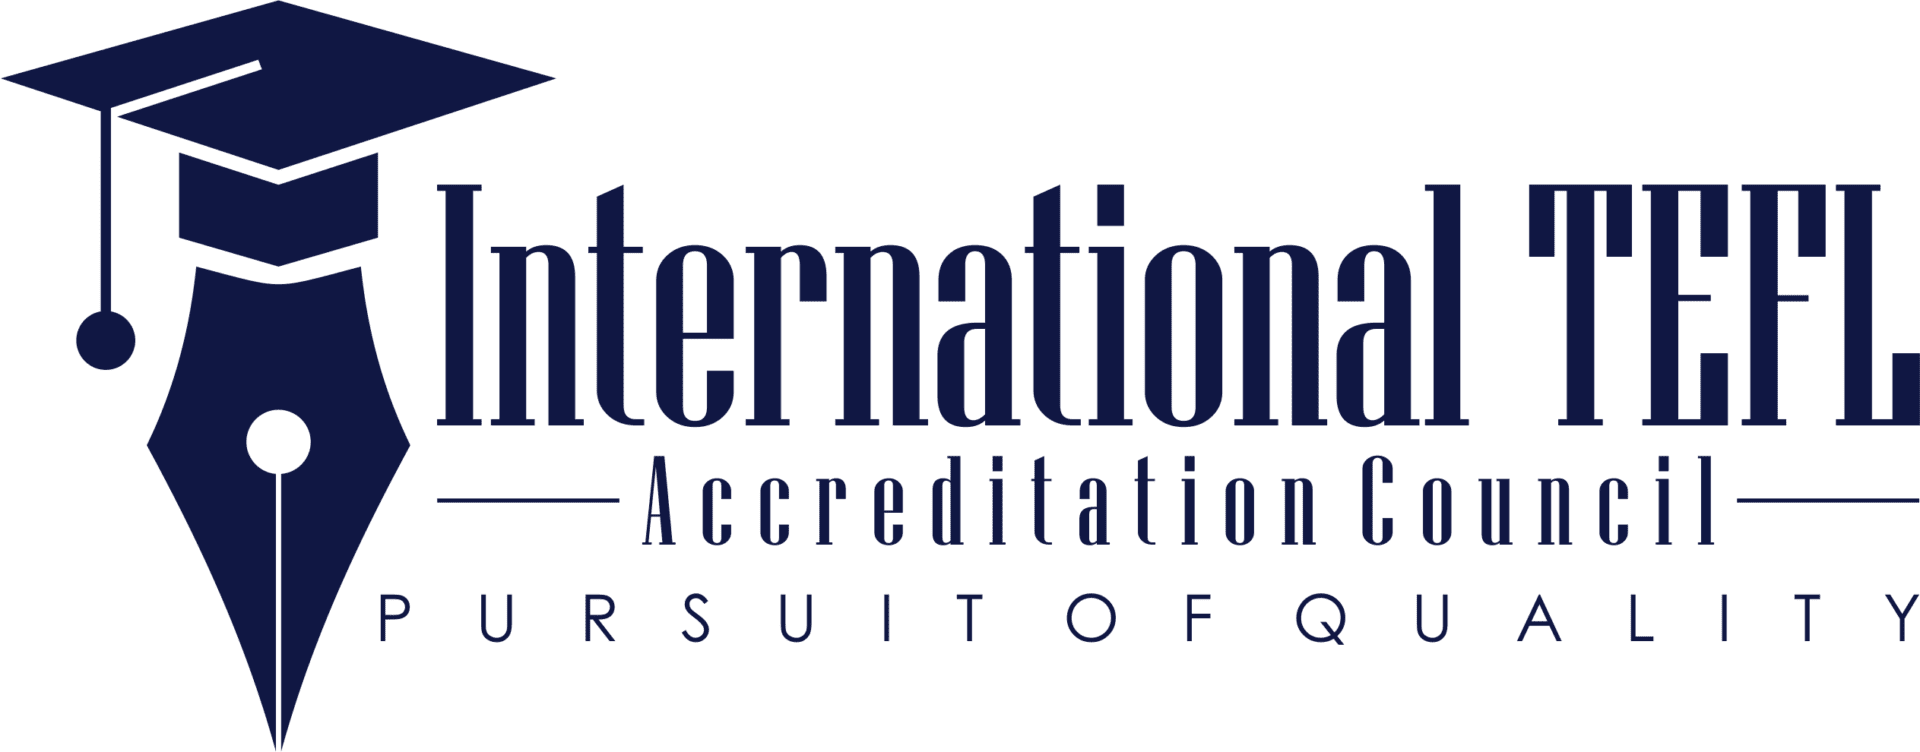 tefl course program accreditation accredited recognized